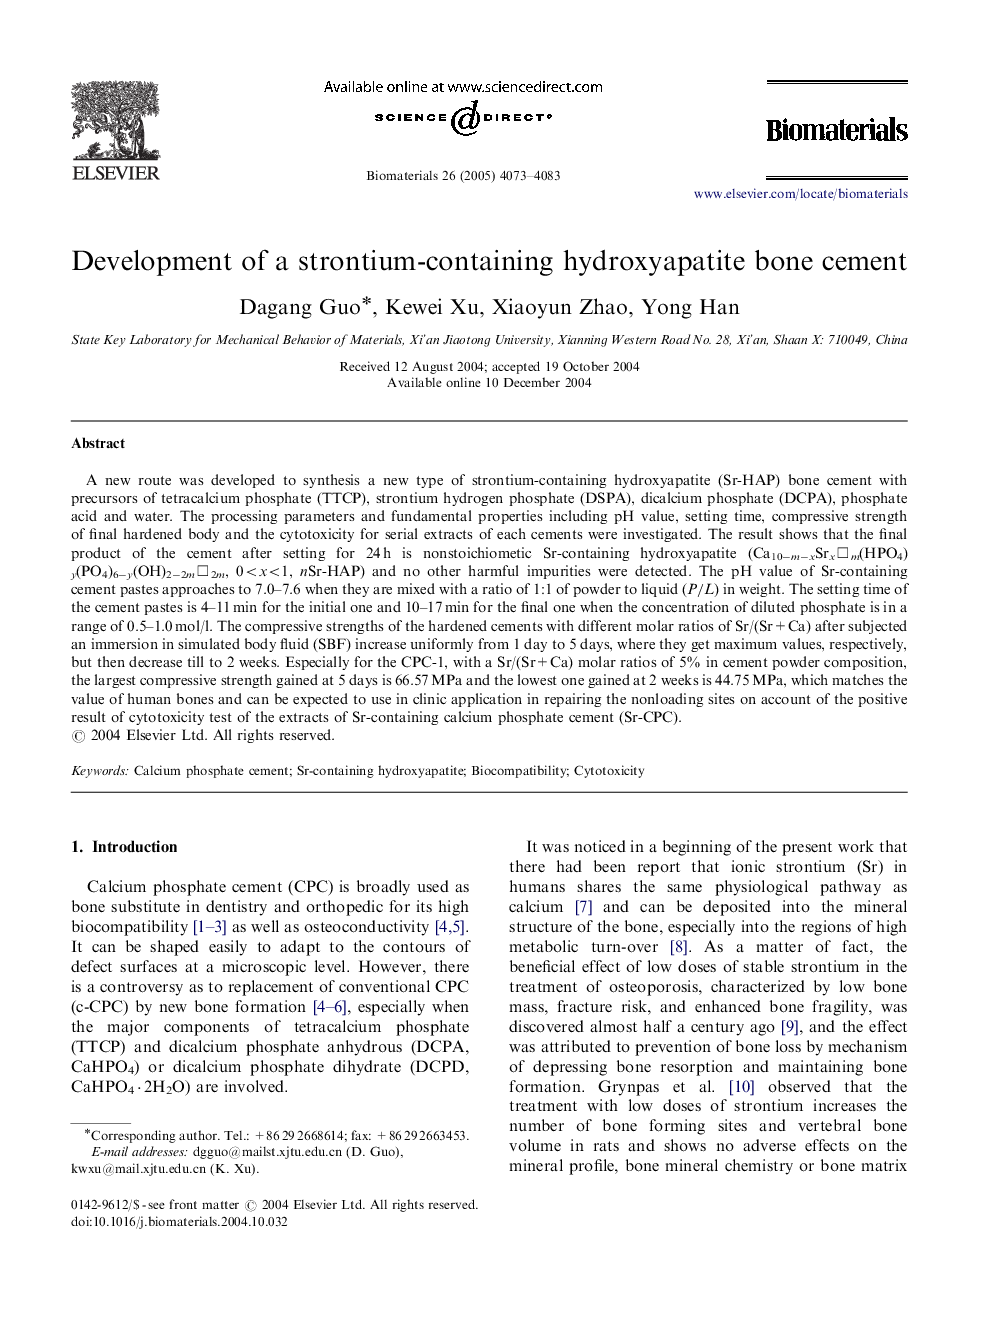 Development of a strontium-containing hydroxyapatite bone cement